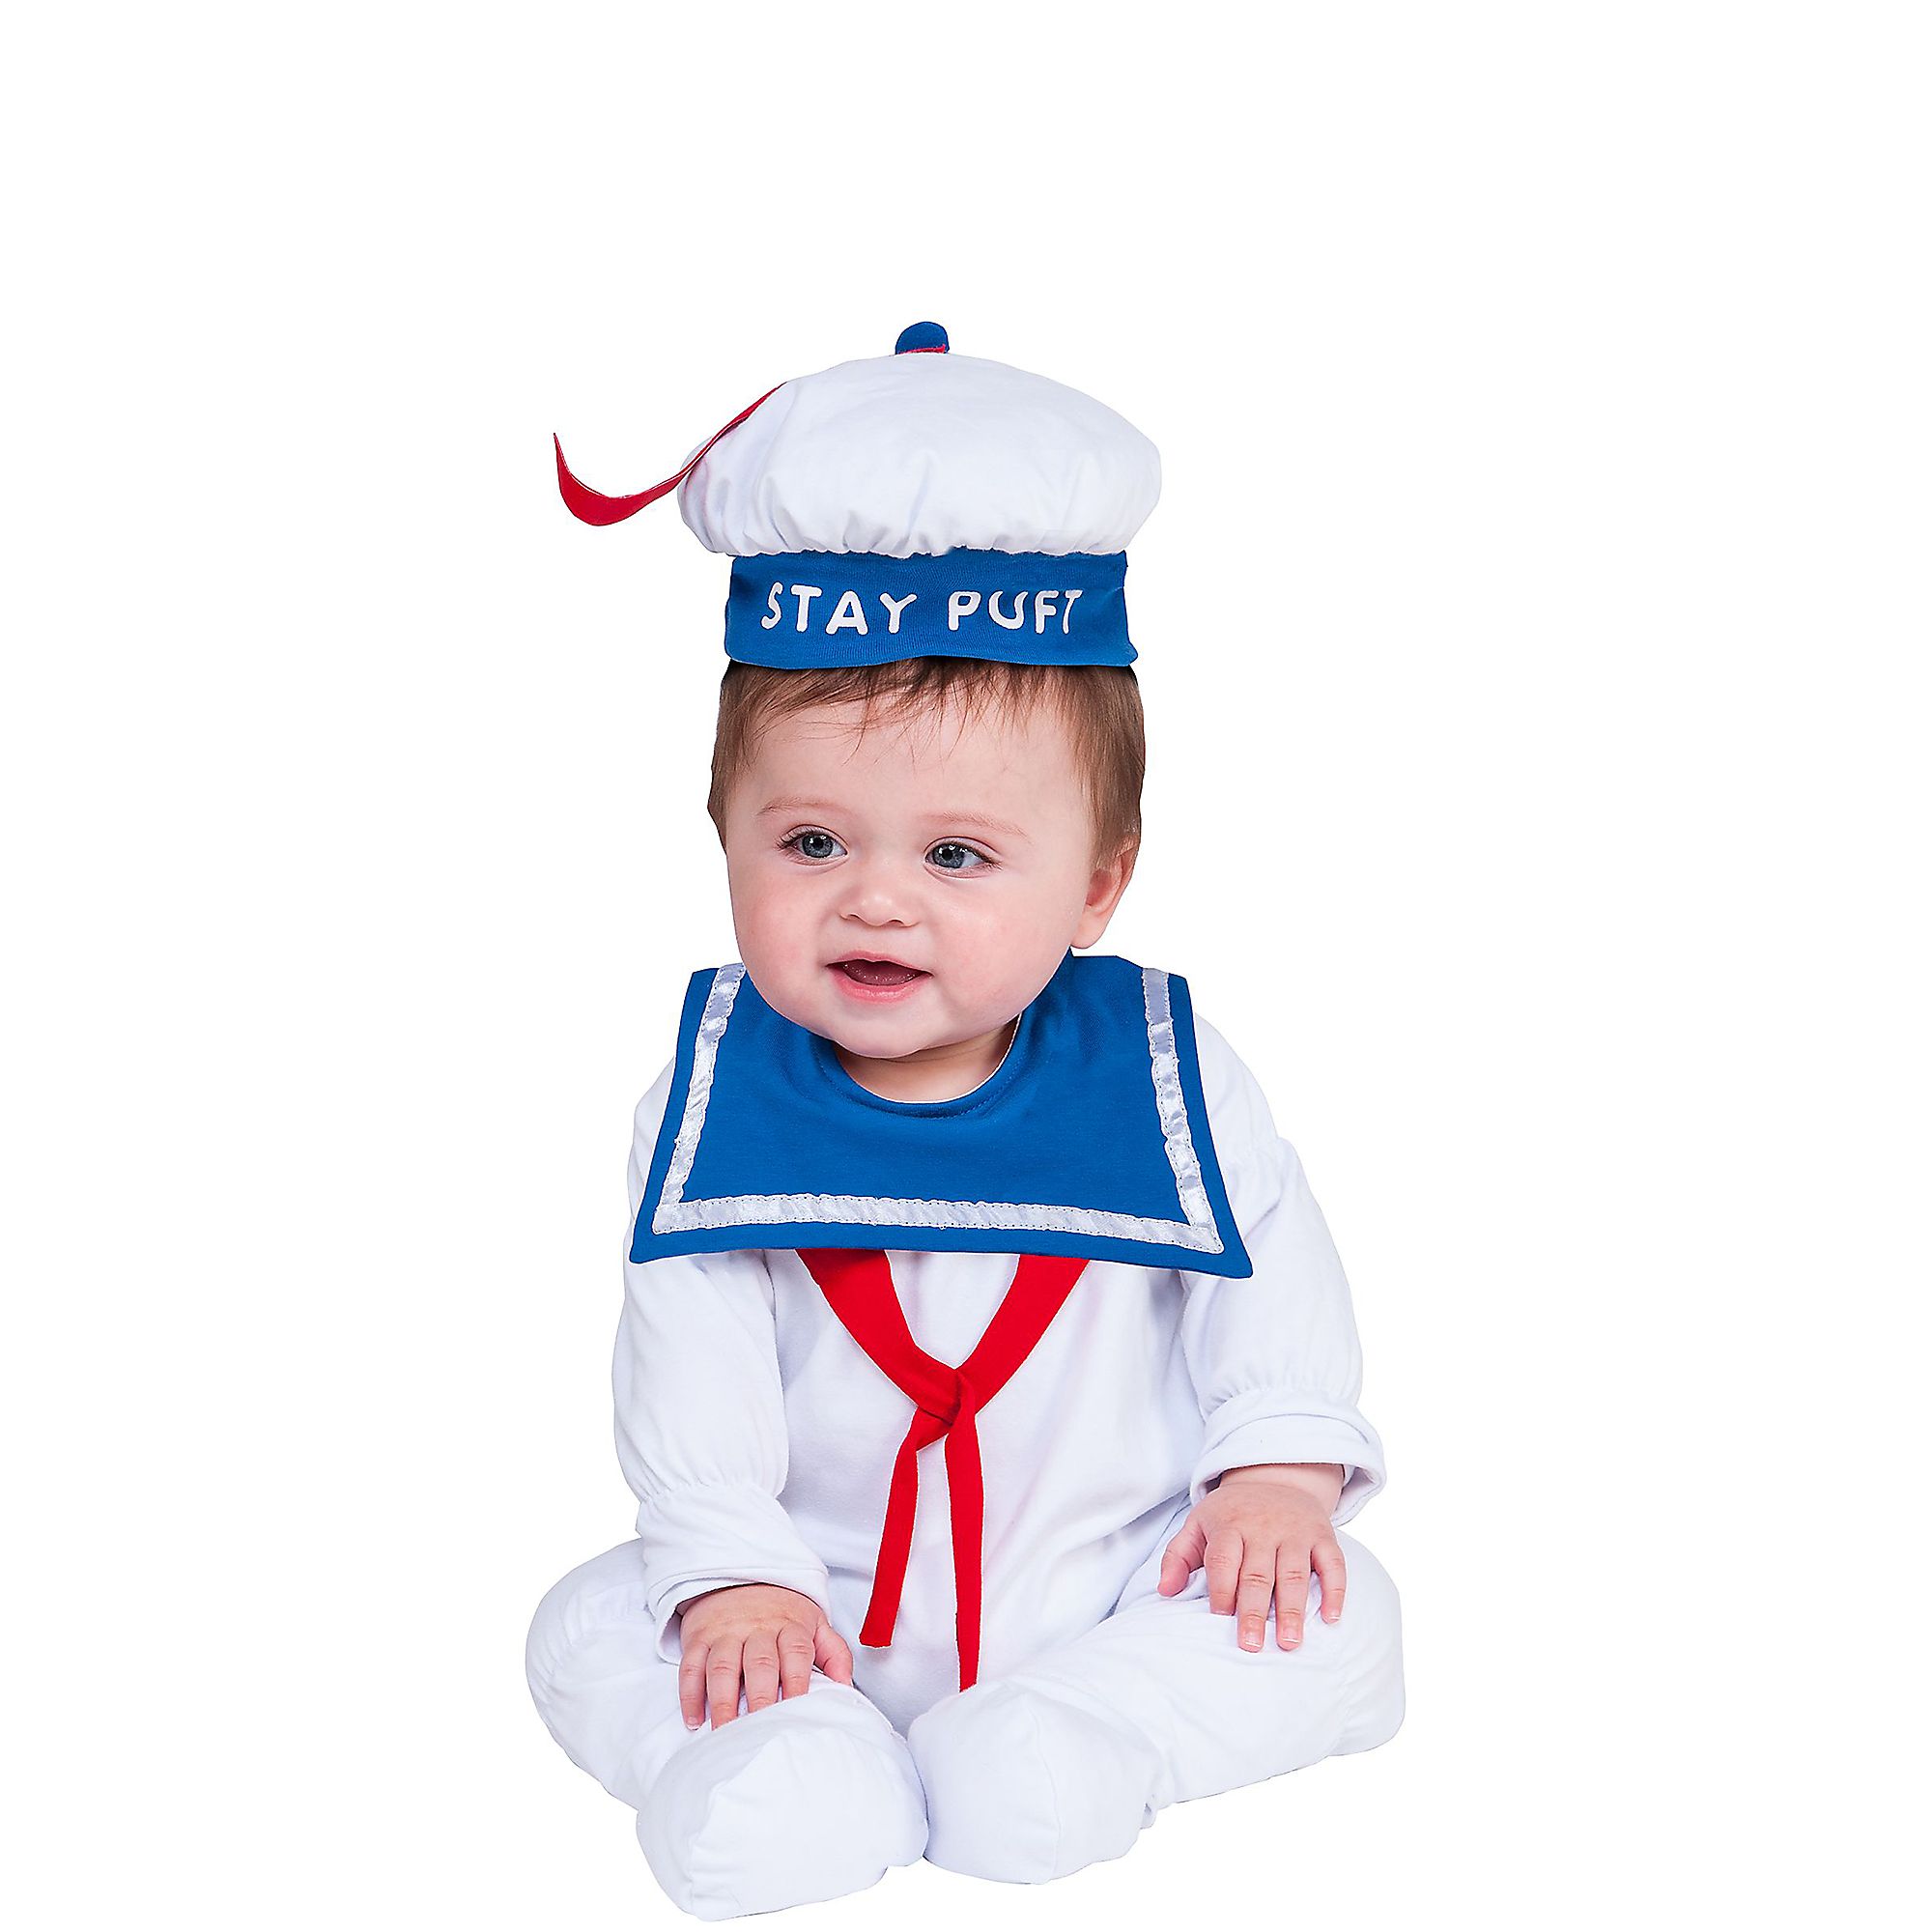 Stay Puft Marshmallow Man Halloween Costume - Ghostbusters Stay Puft Marshmallow Man Halloween Costume, Infants, 6-12